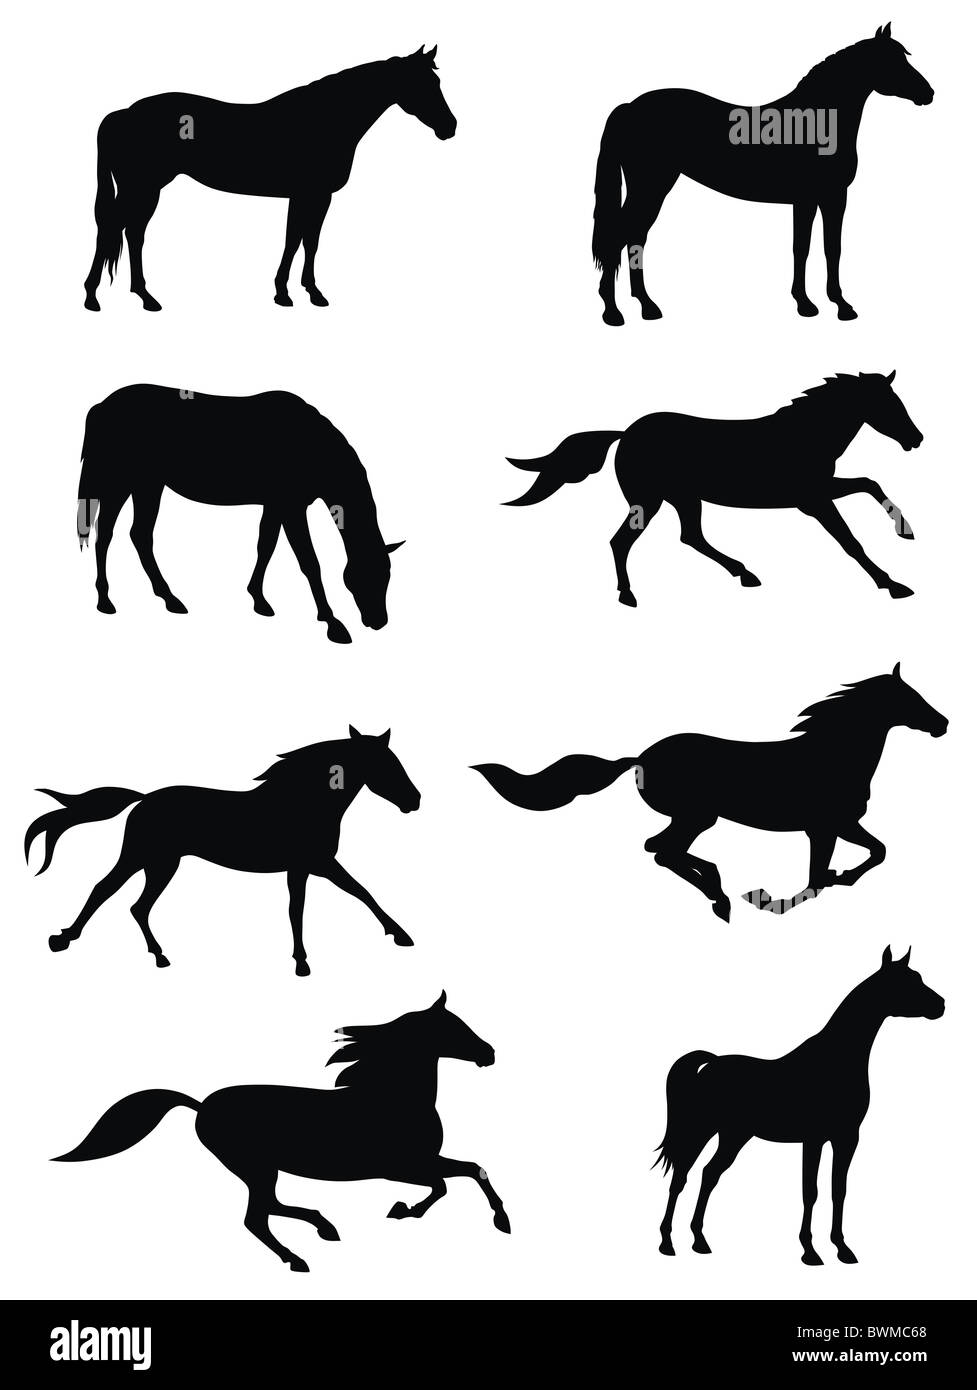 Illustration of horse silhouettes Stock Photo